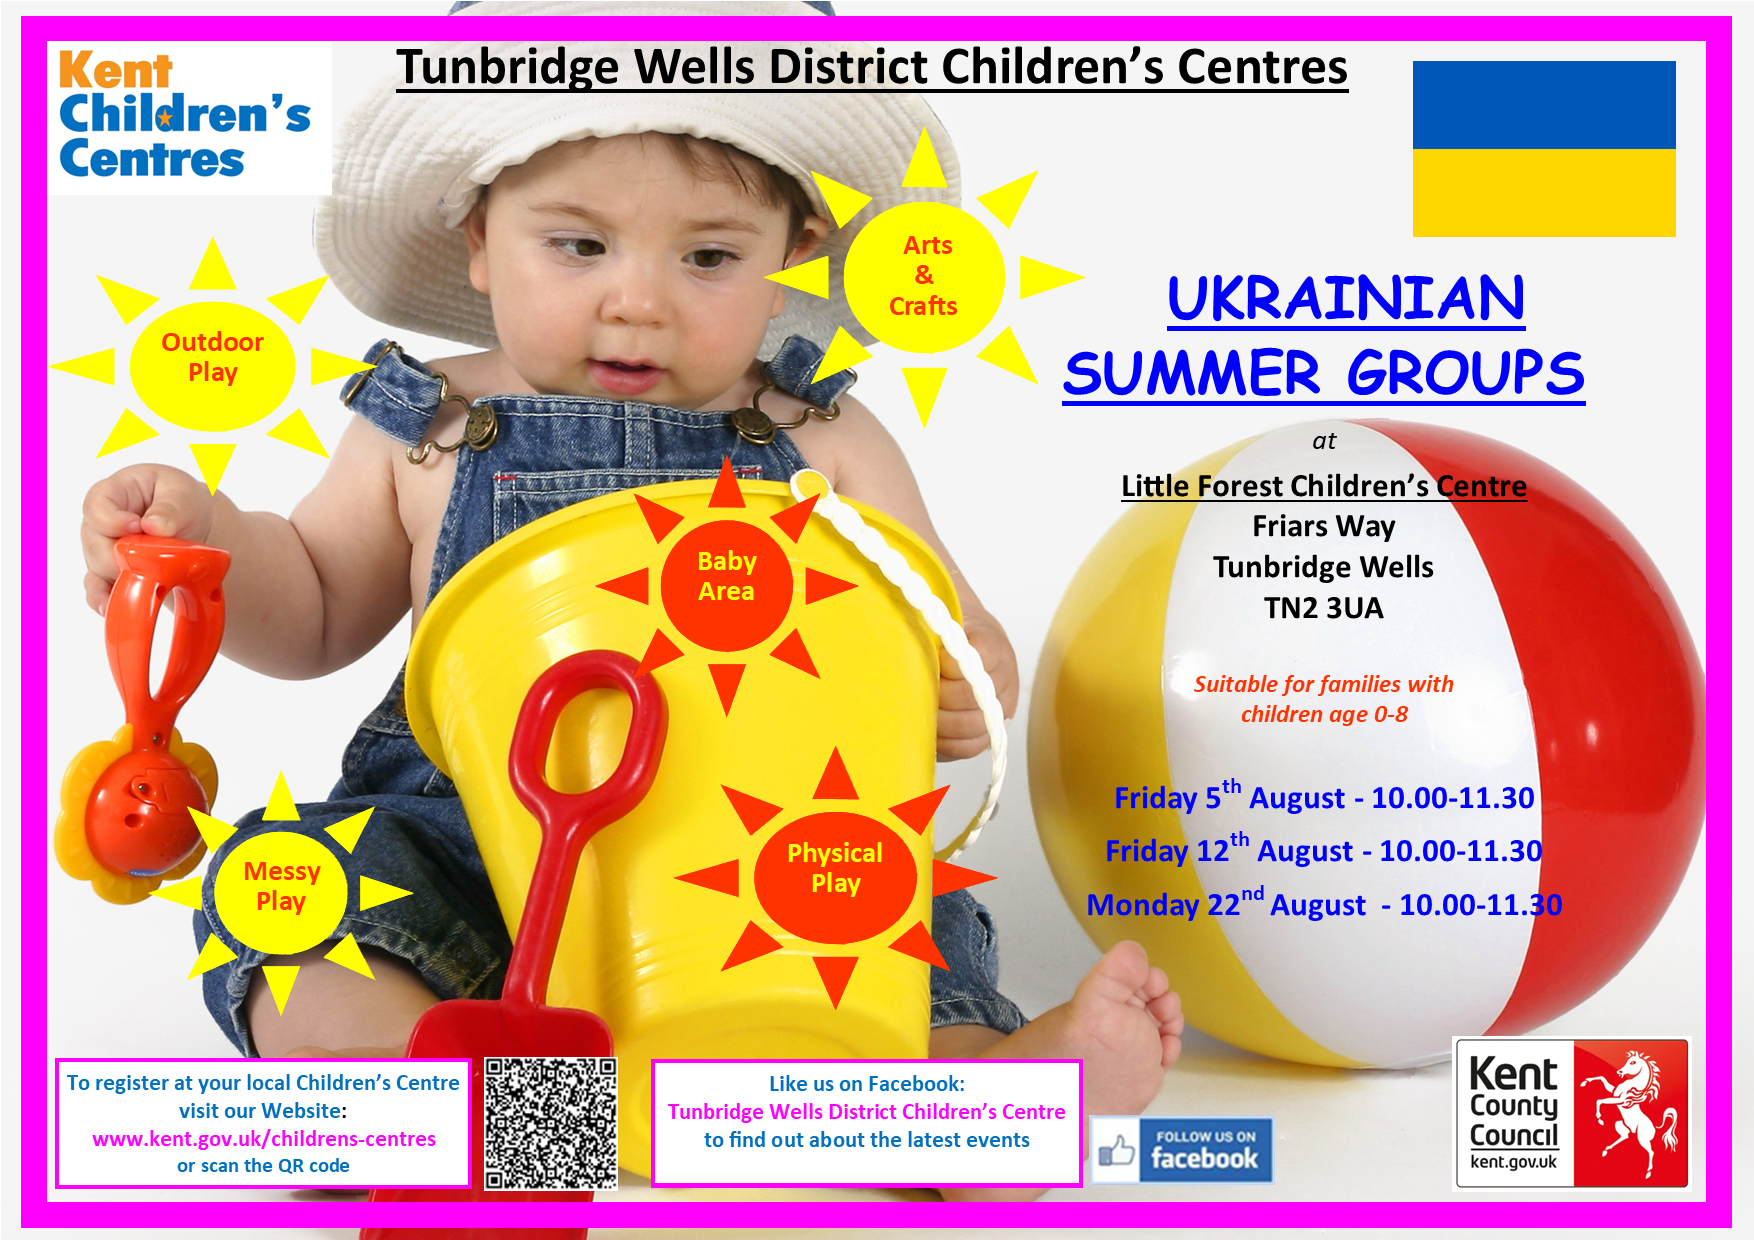 Ukrainian Summer Groups – Tunbridge Wells District Children’s Centres